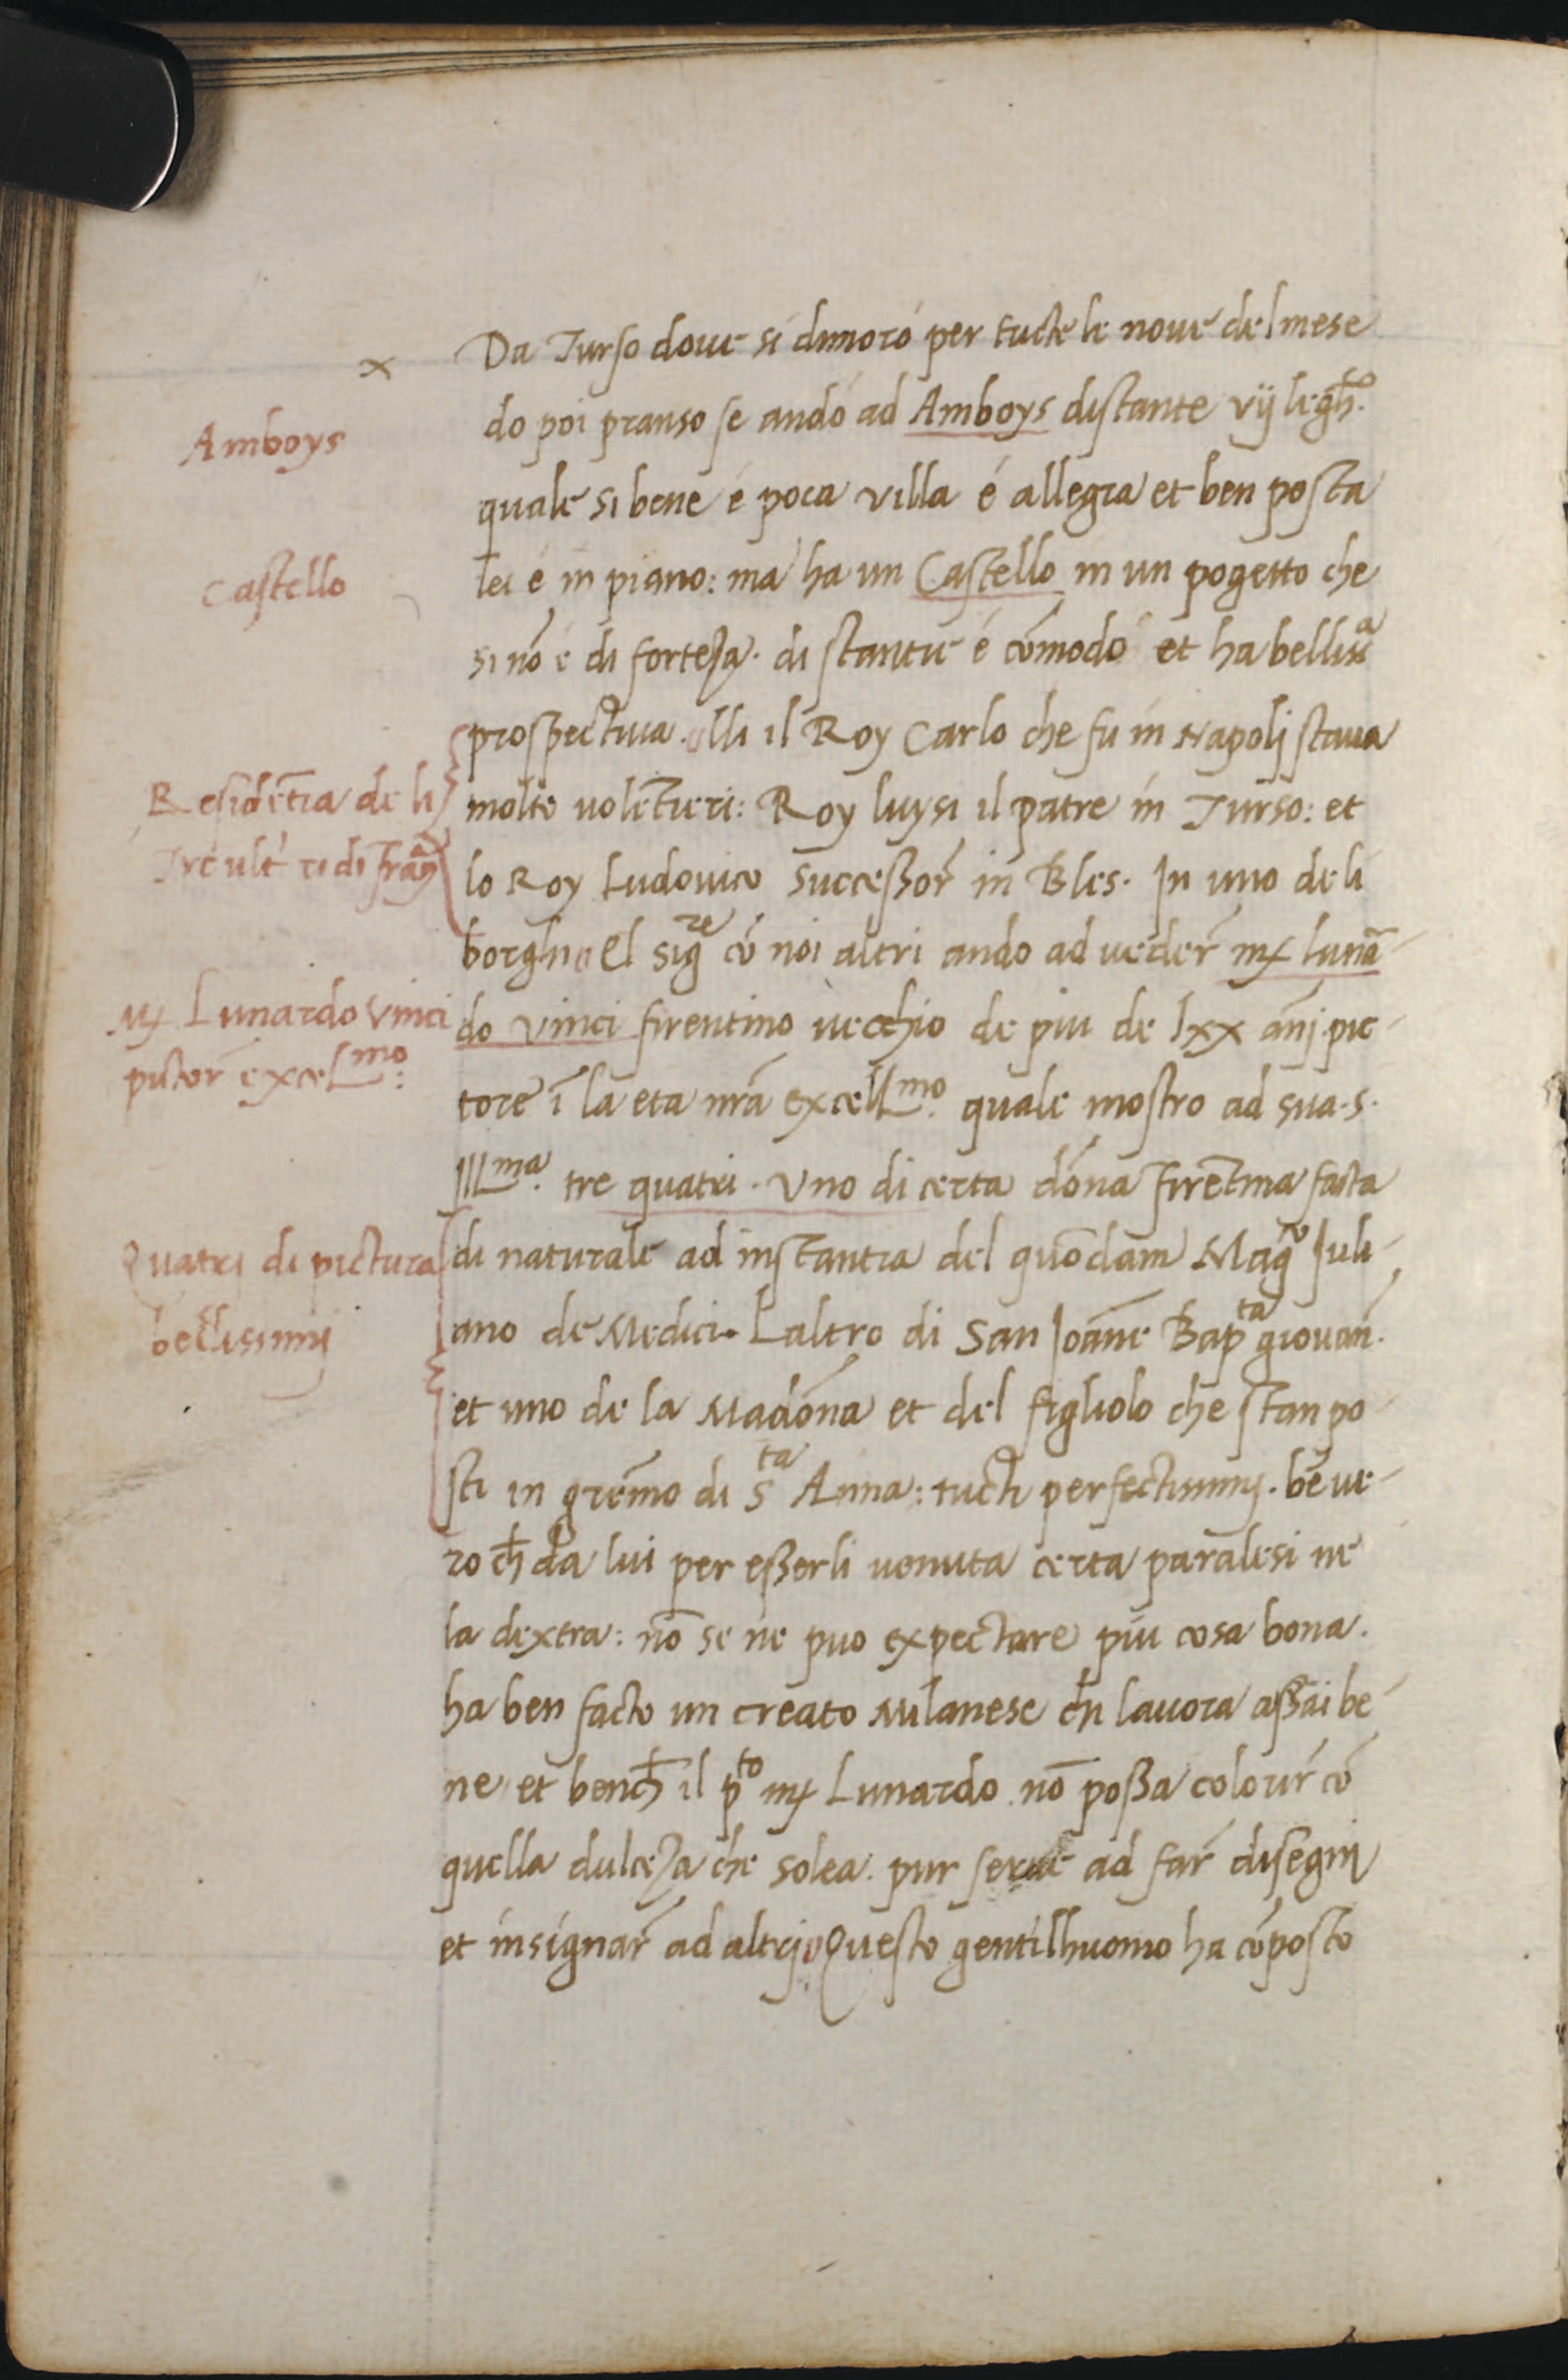 Antonio de Beatis - Account of the visit to Leonardo da Vinci - October 10 1517